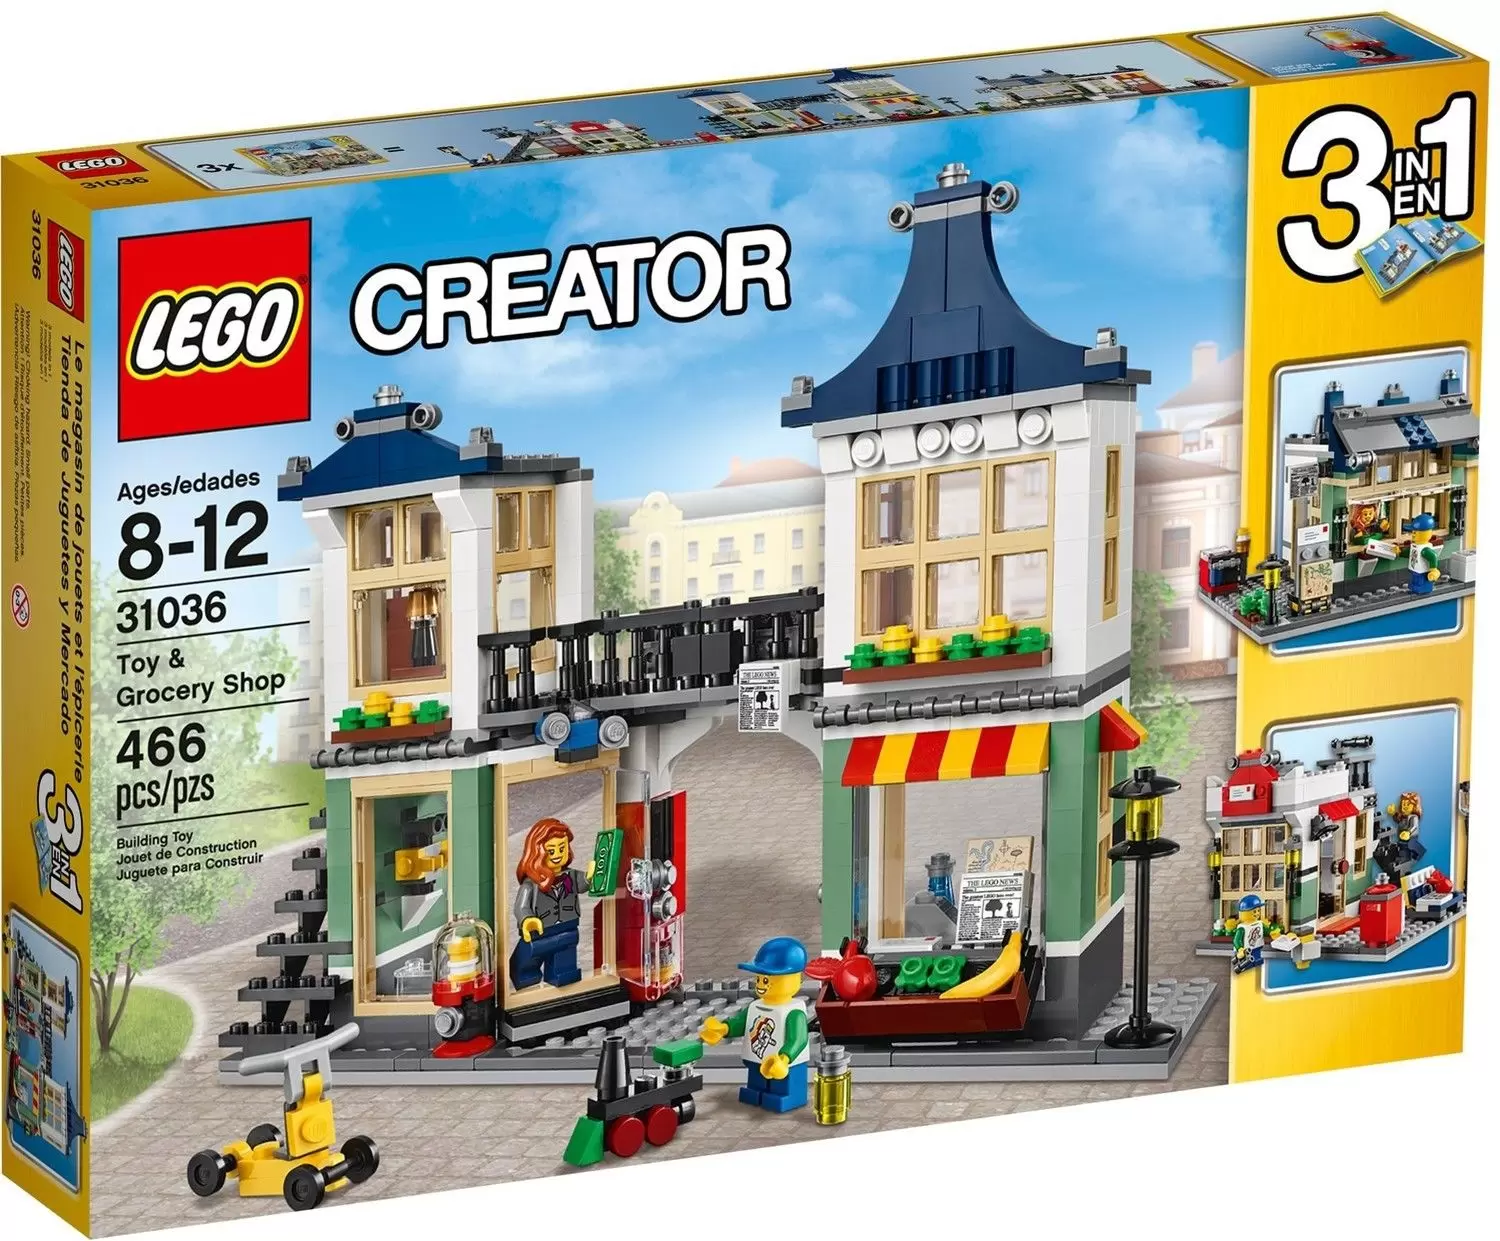 LEGO Creator - Toy & Grocery Shop